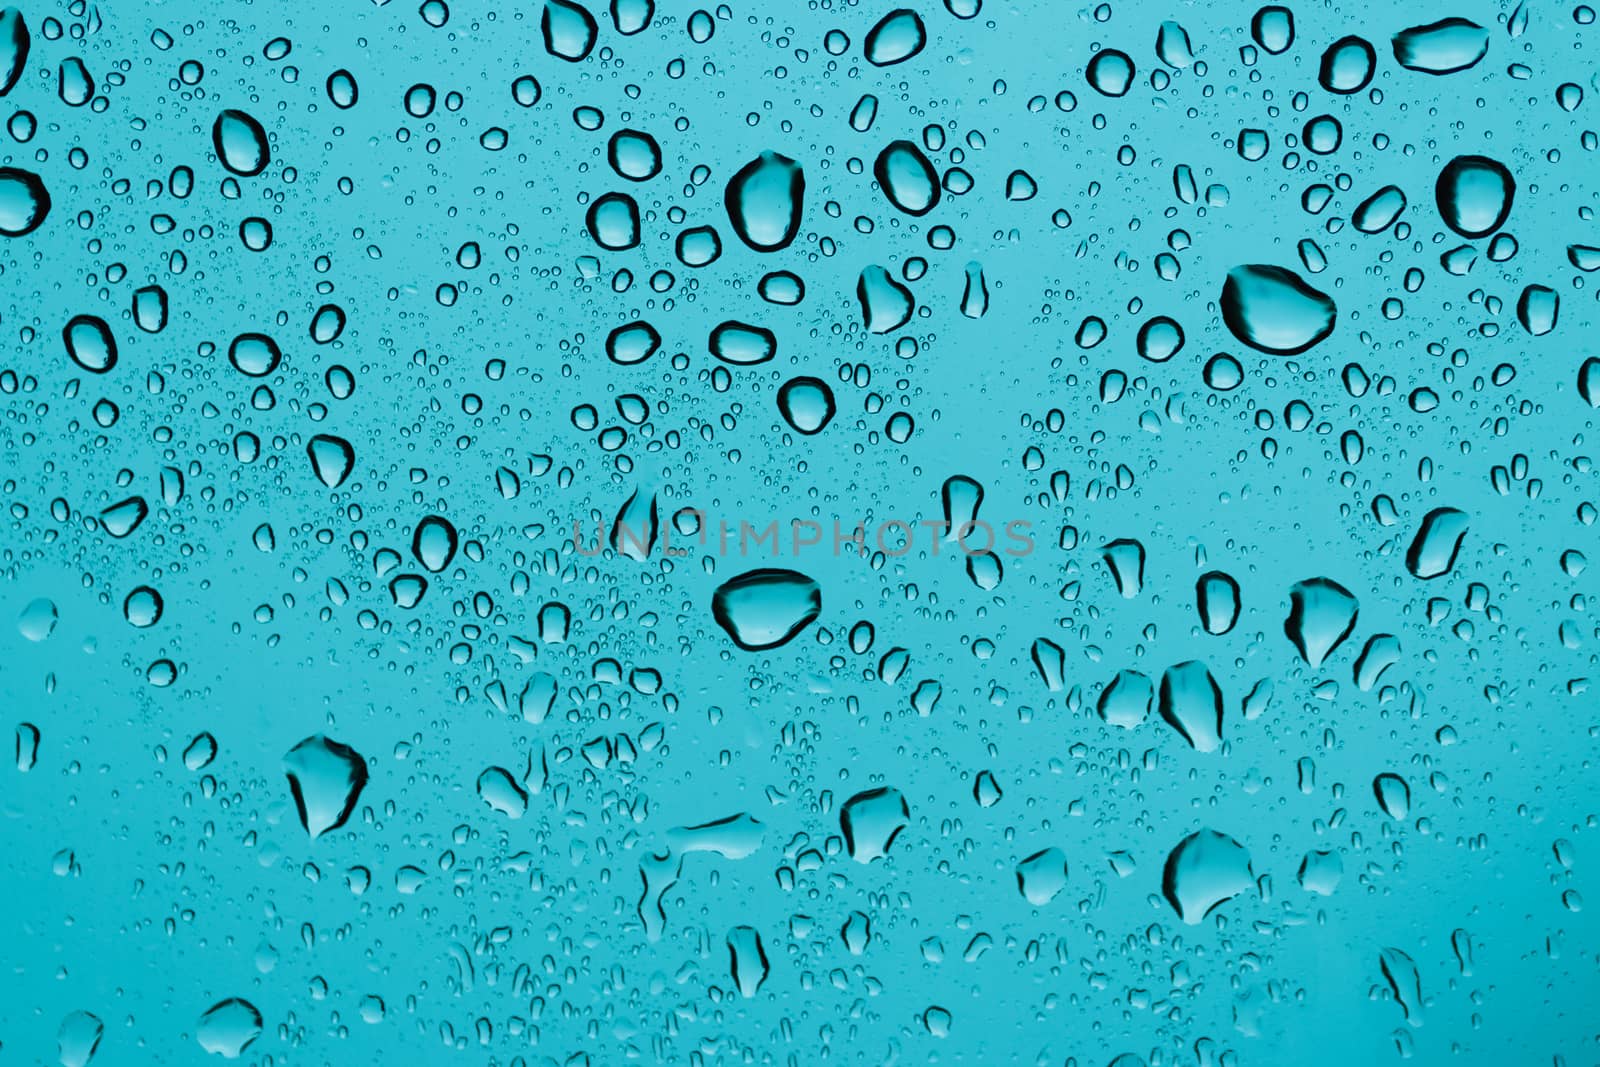 rain drops on a window glass. Shallow DOF